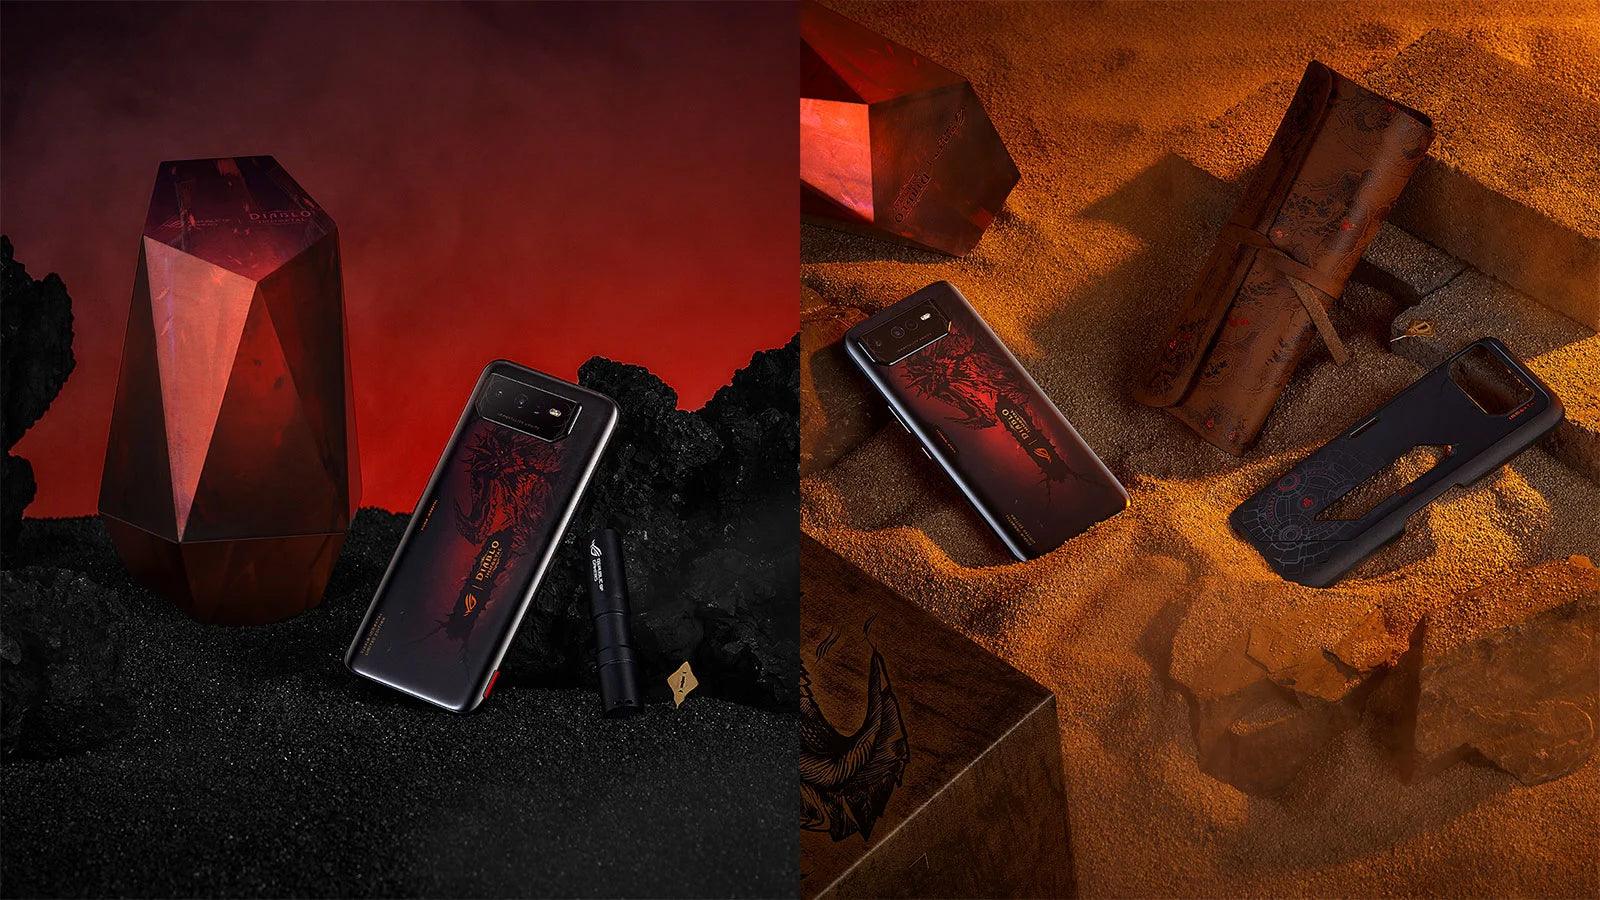 Asus ROG Phone 6 Diablo Immortal Edition (16/512GB) *Limited Edition* - Mainz Empire Pte Ltd